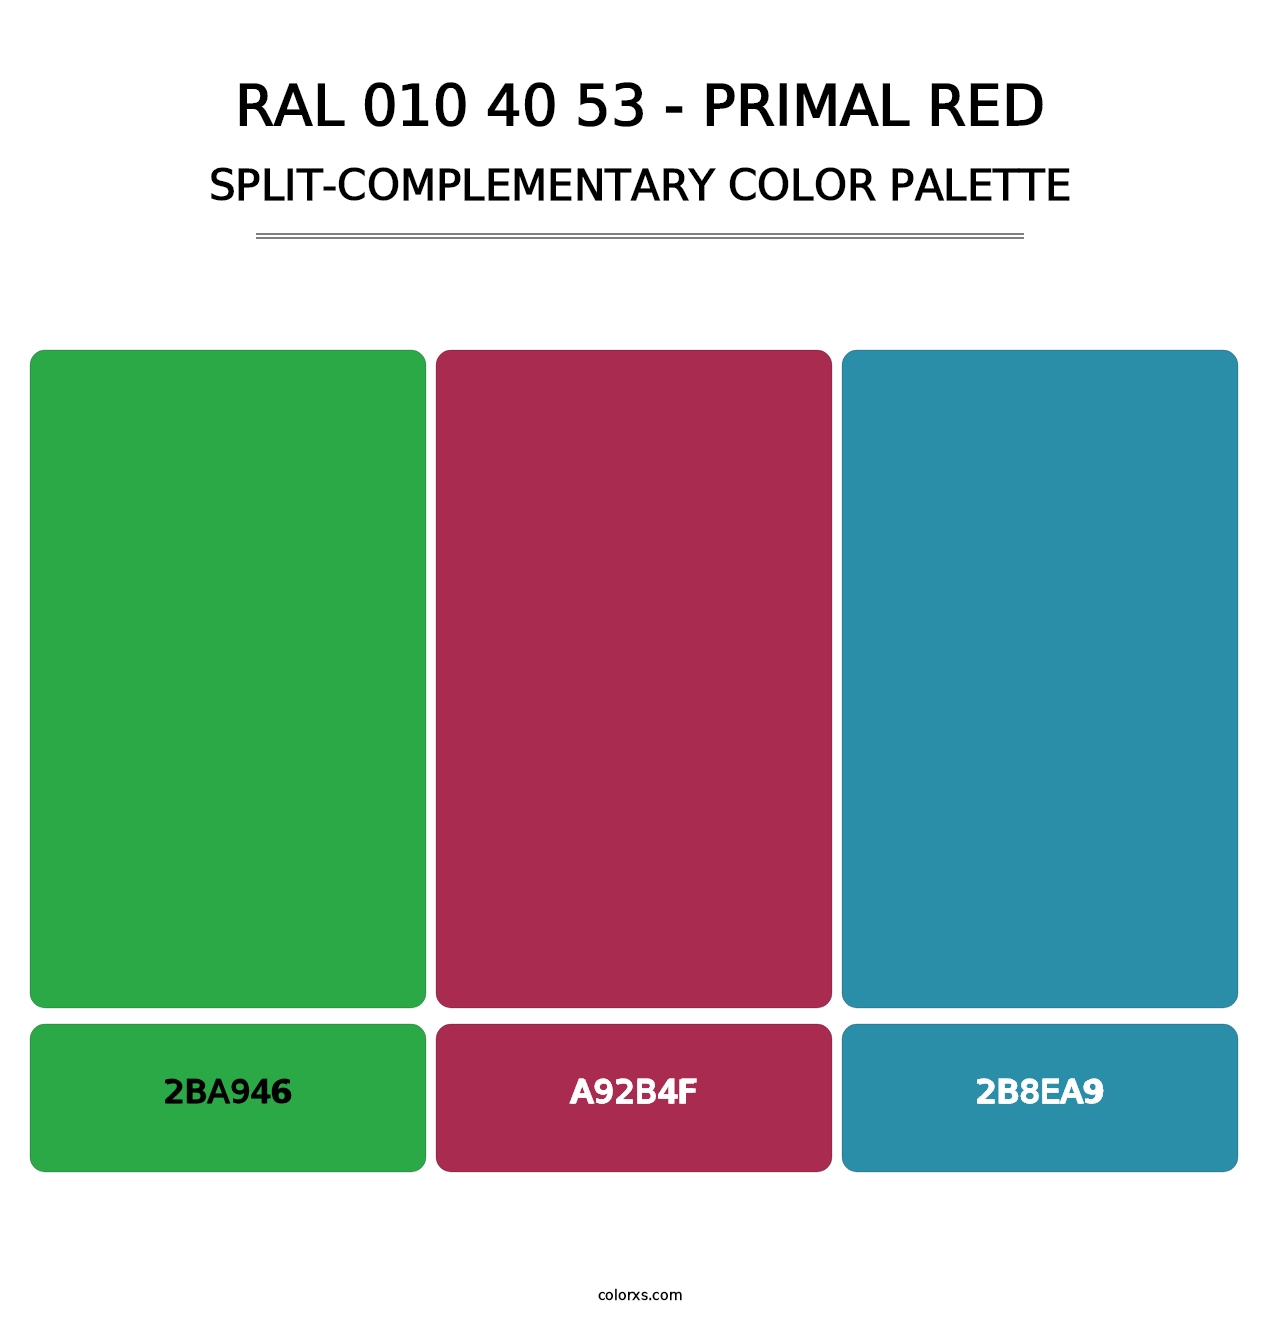 RAL 010 40 53 - Primal Red - Split-Complementary Color Palette